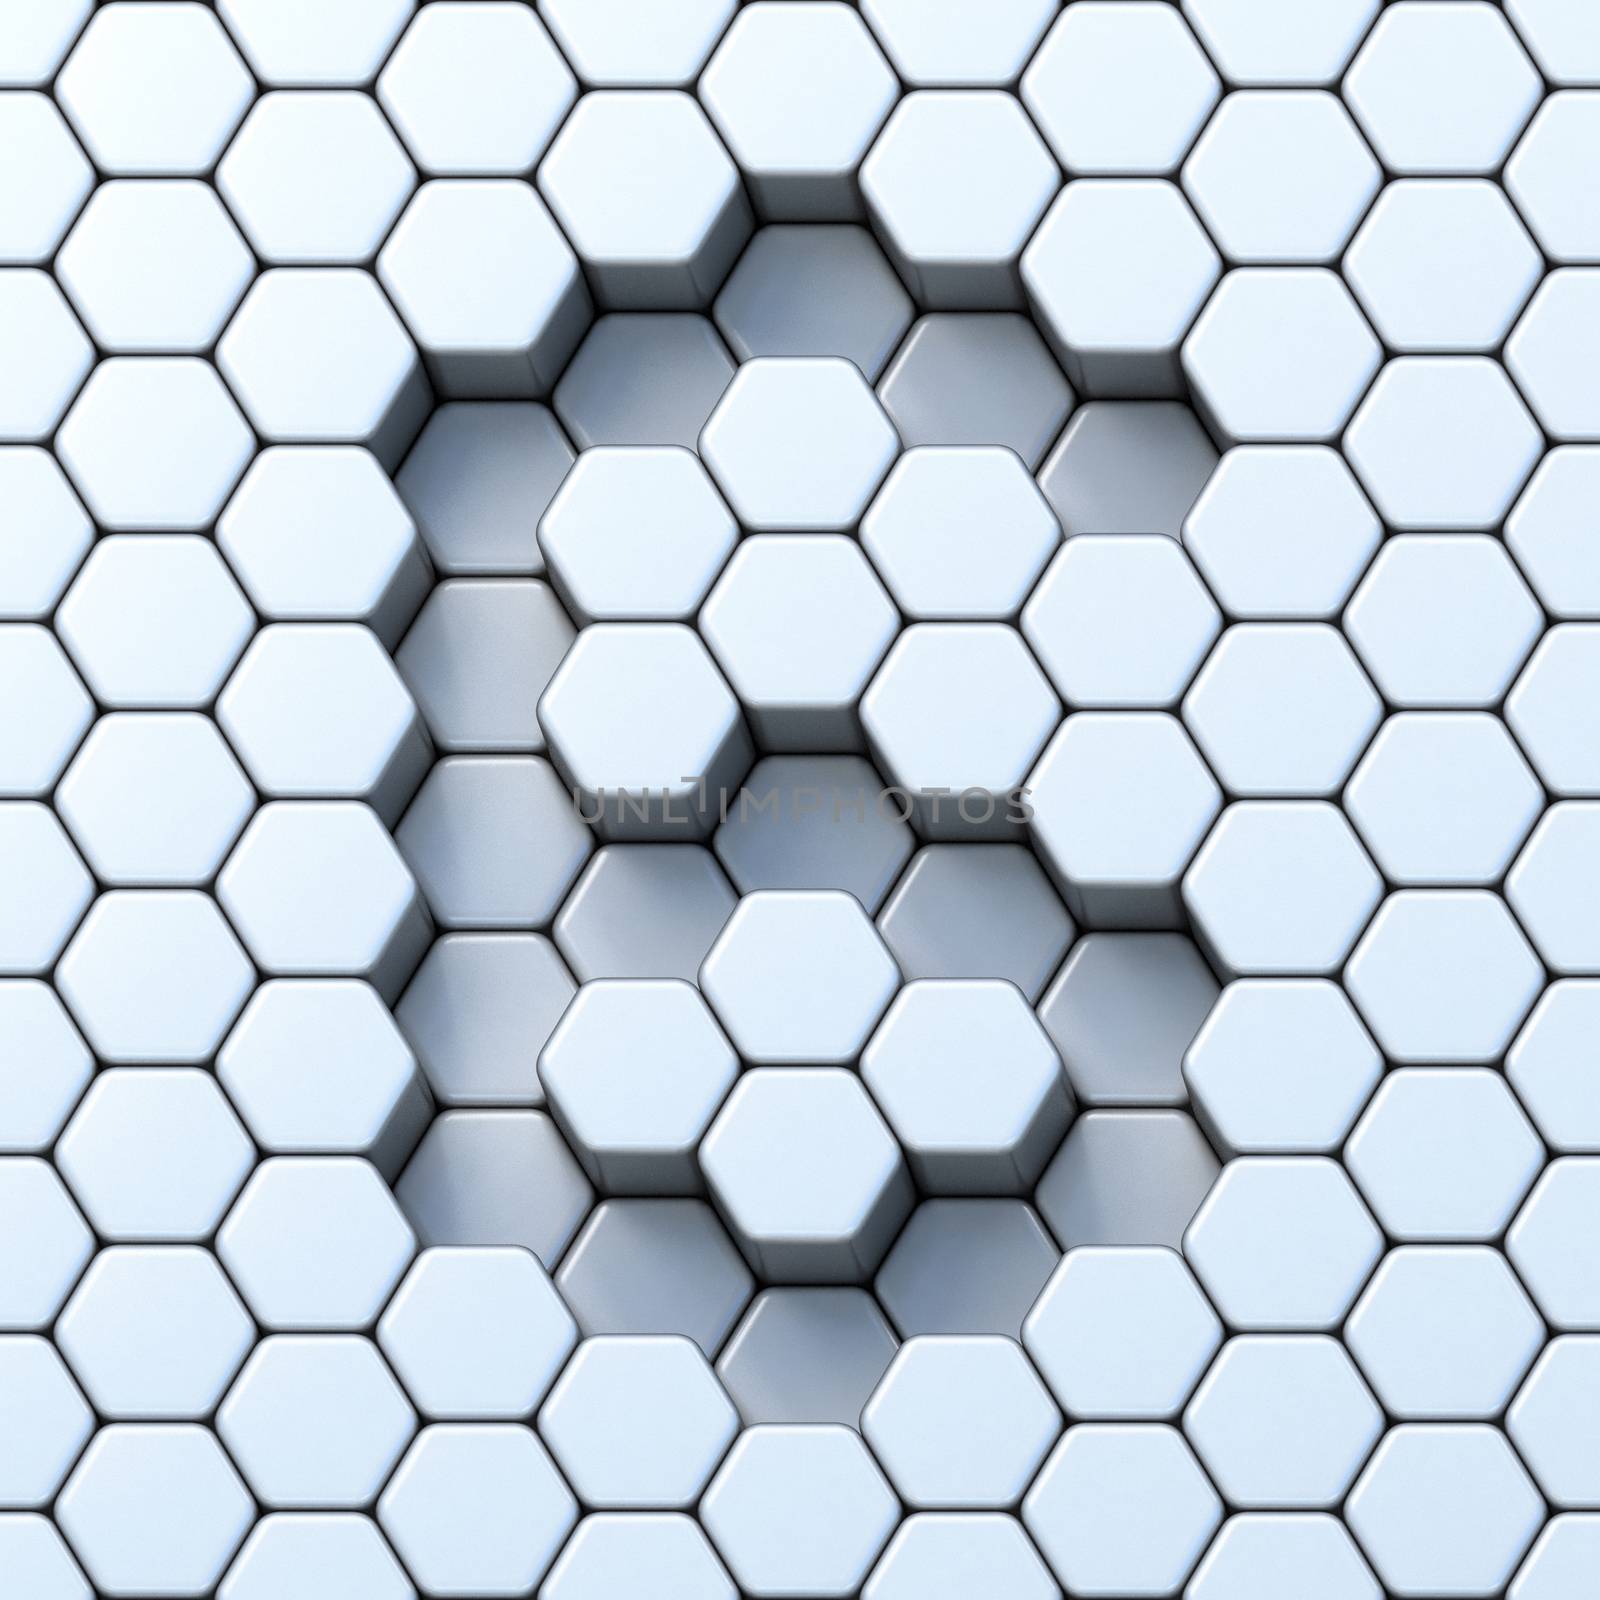 Hexagonal grid number SIX 6 3D render illustration